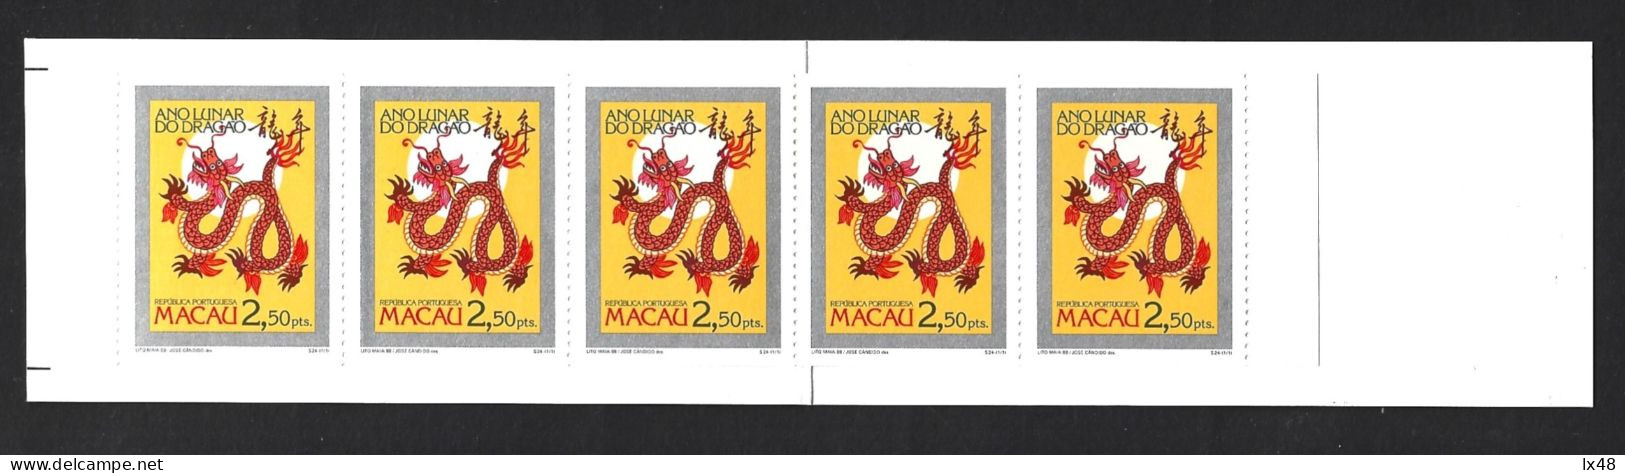 Dragon. Mythology. Astrology. Block Of 5 Stamps Of The Lunar Year Of The Dragon 1988, Macau. Drachen. Mythologie. Astro - Astrologie